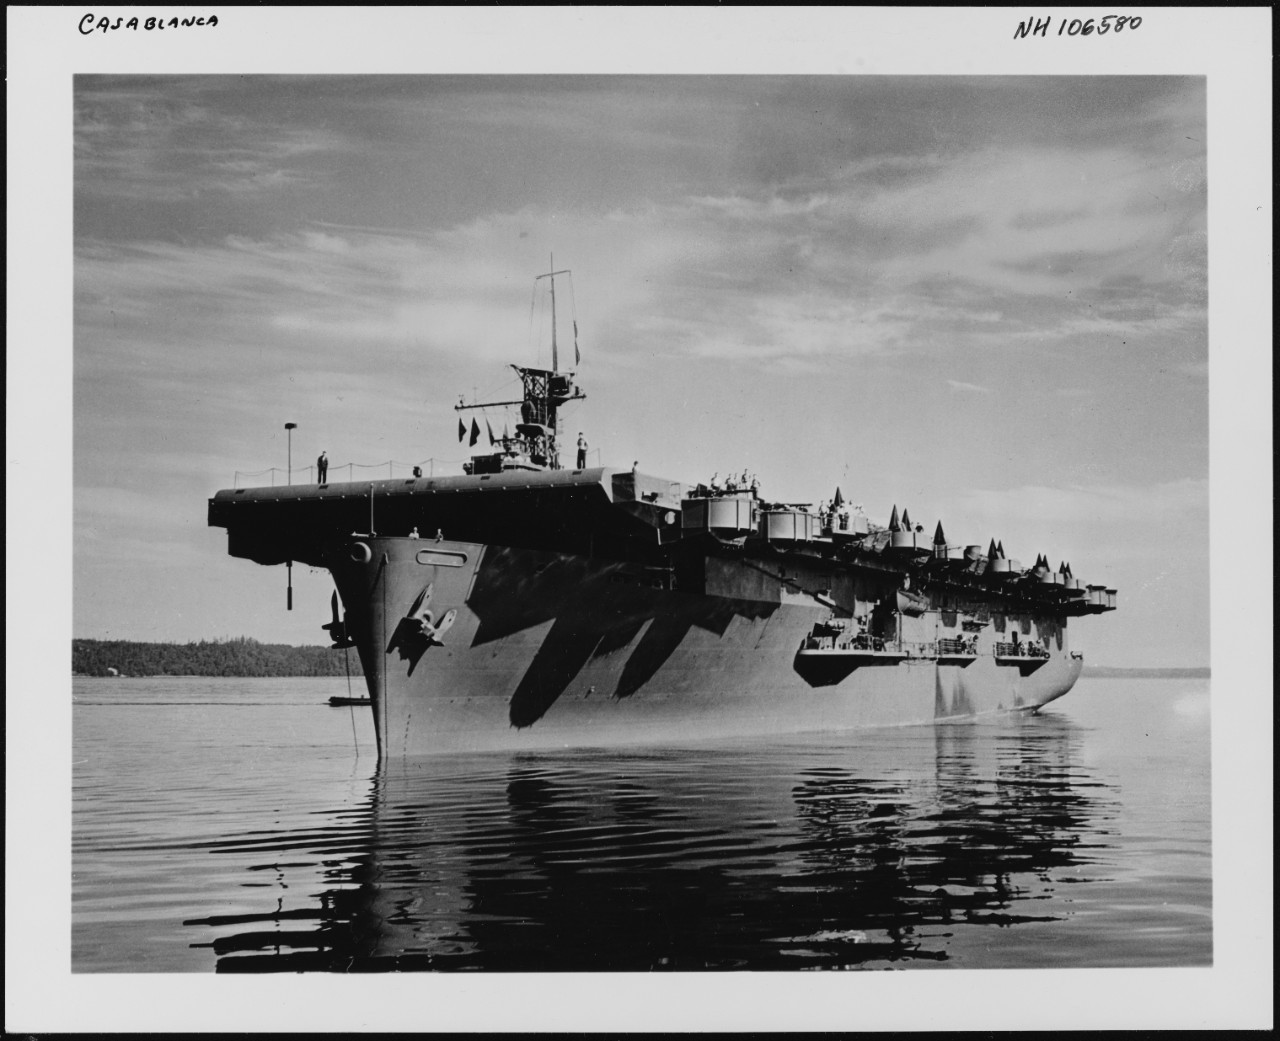 Photo # NH 106580  USS Casablanca